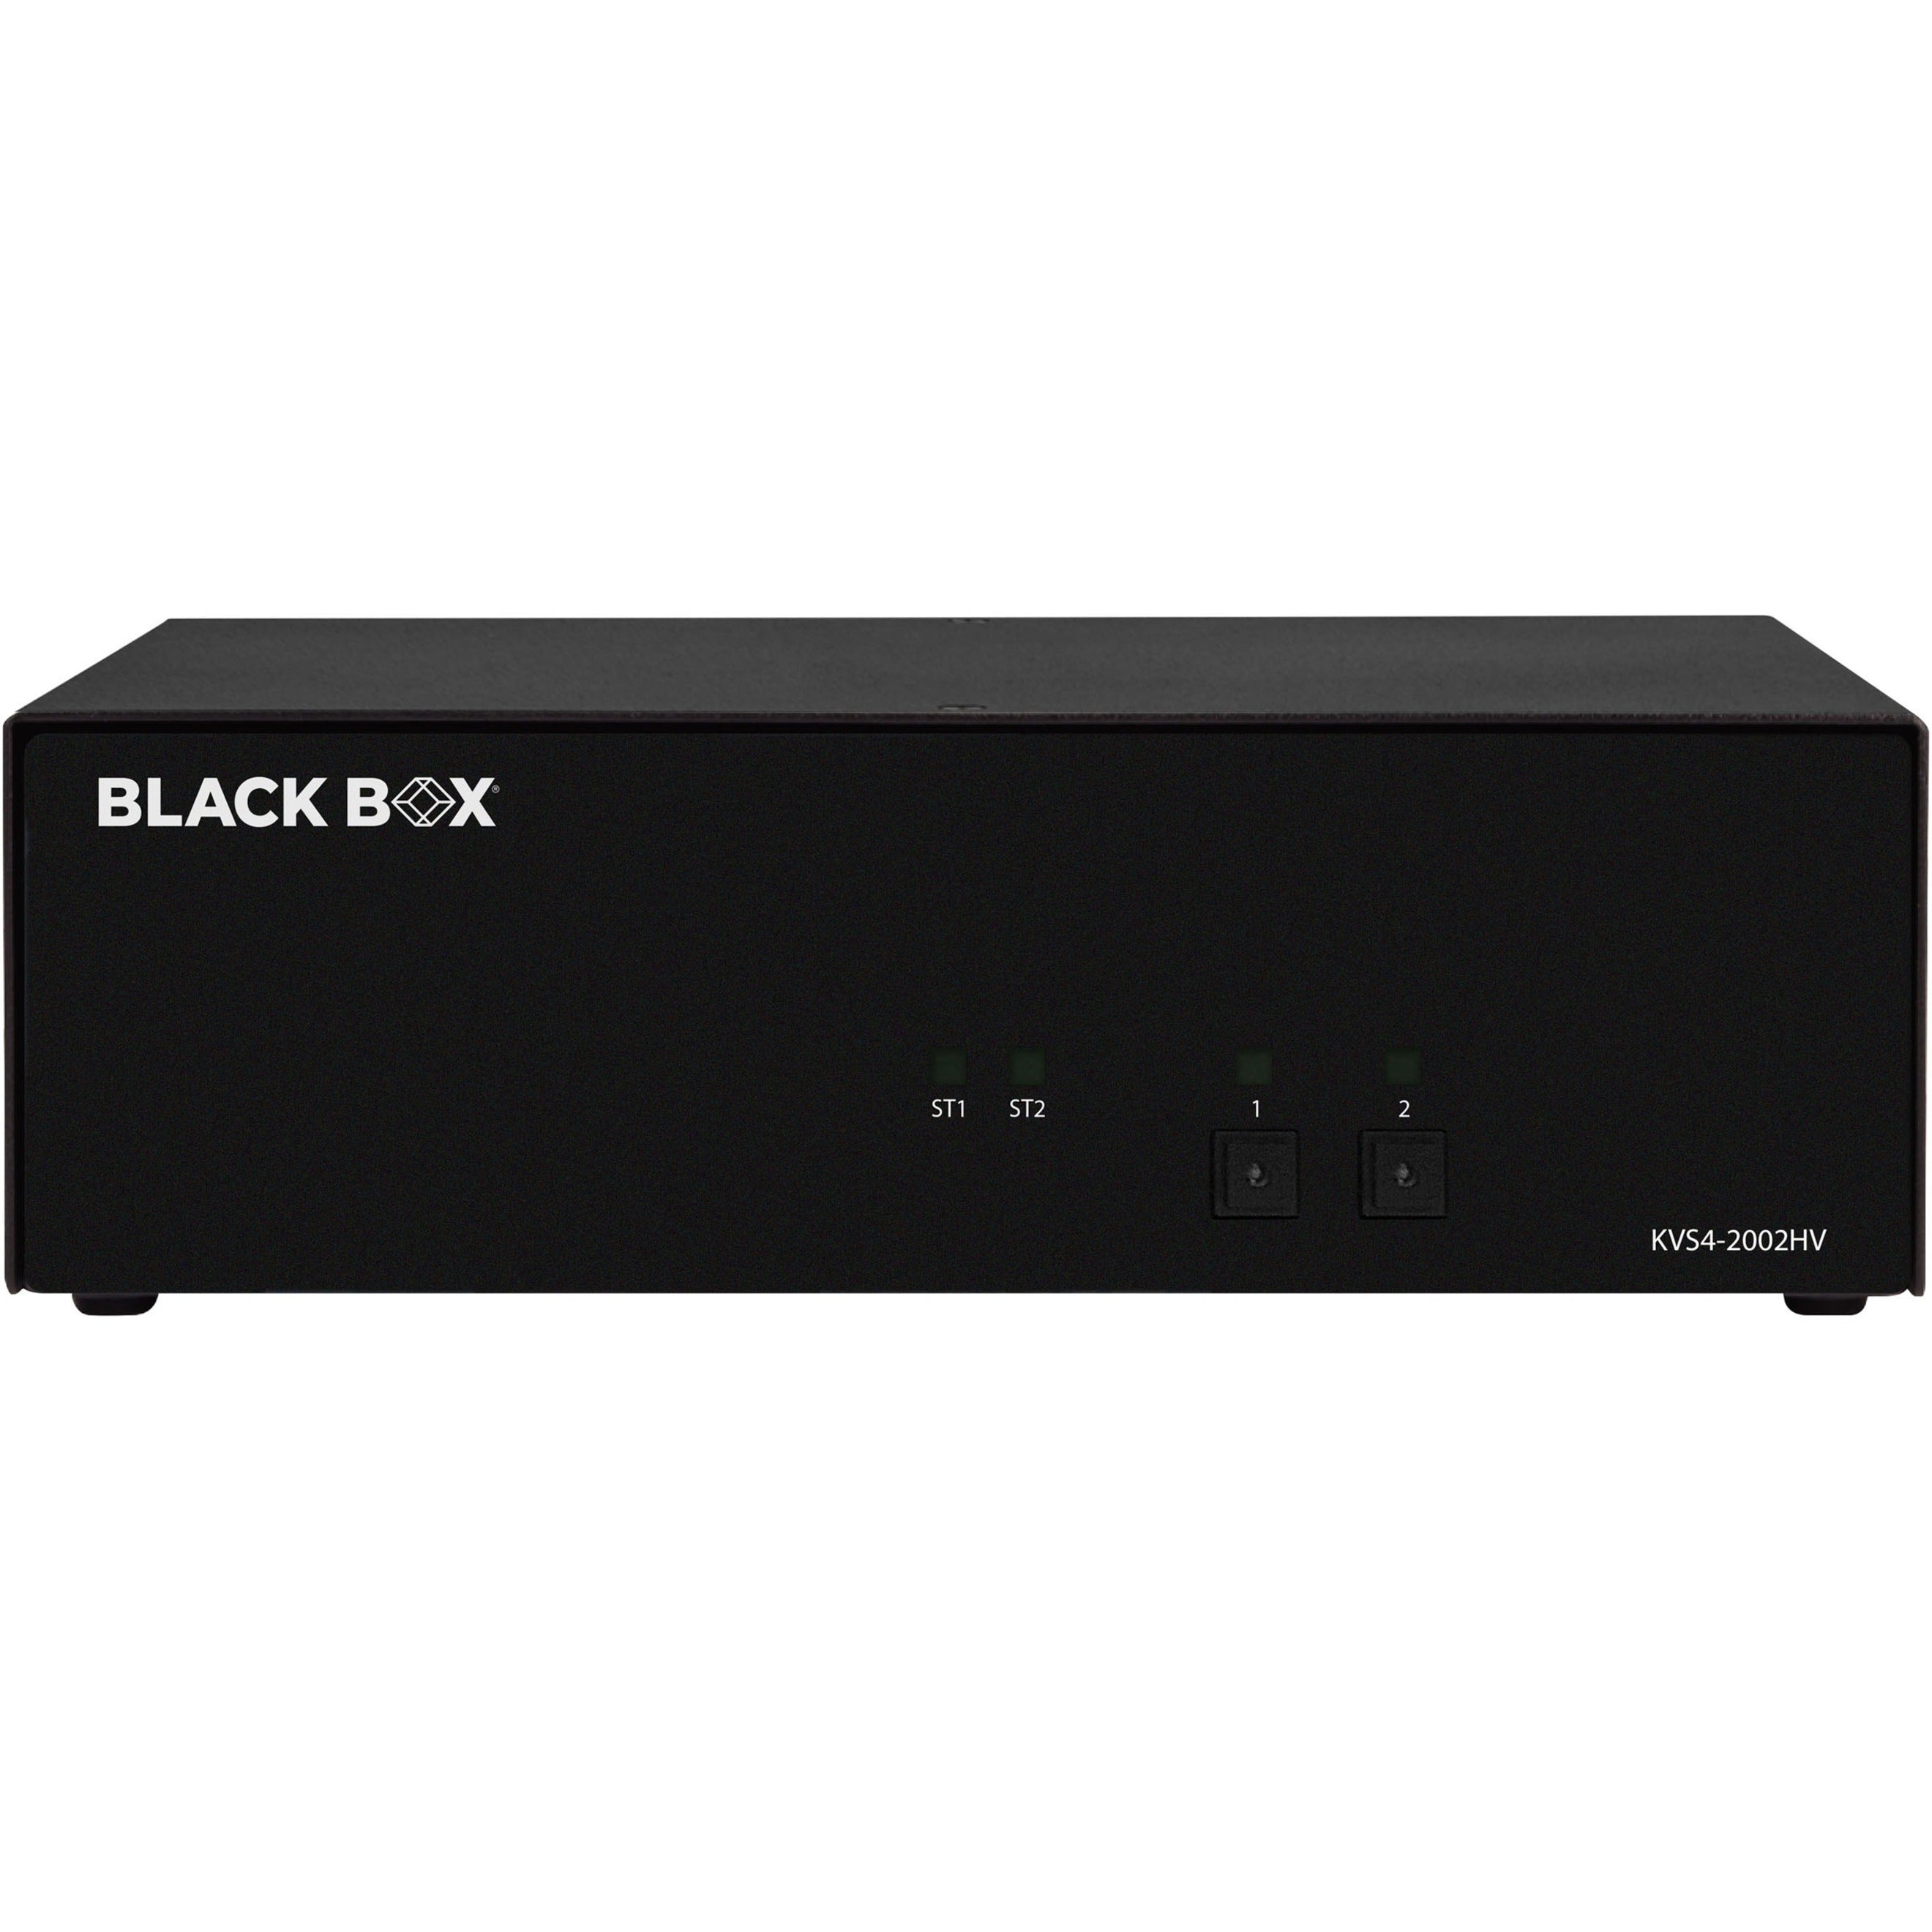 Black Box KVS4-2002HV Secure KVM Switch - FlexPort HDMI/DisplayPort, 4 USB Ports, 3840 x 2160 Resolution, 1 Year Warranty